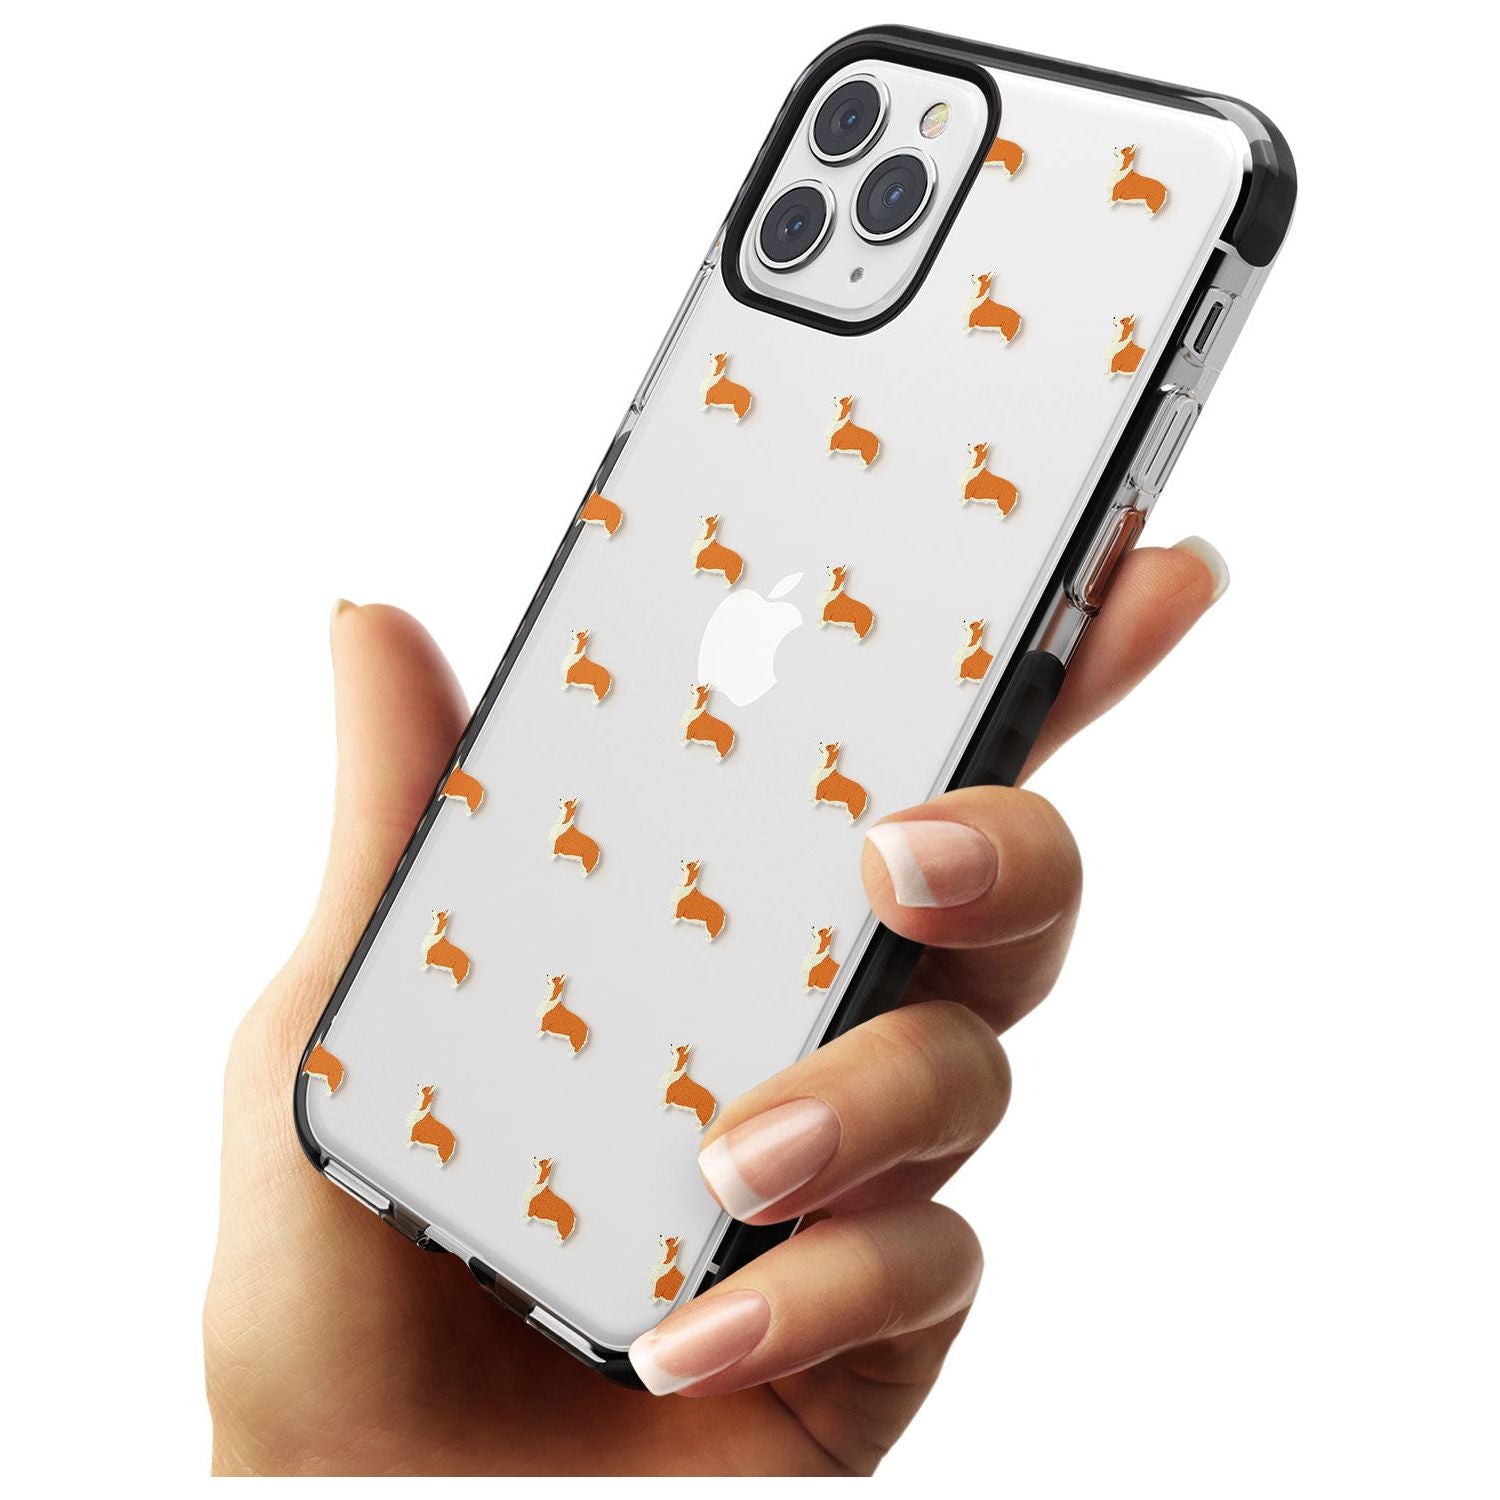 Pembroke Welsh Corgi Dog Pattern Clear Black Impact Phone Case for iPhone 11 Pro Max